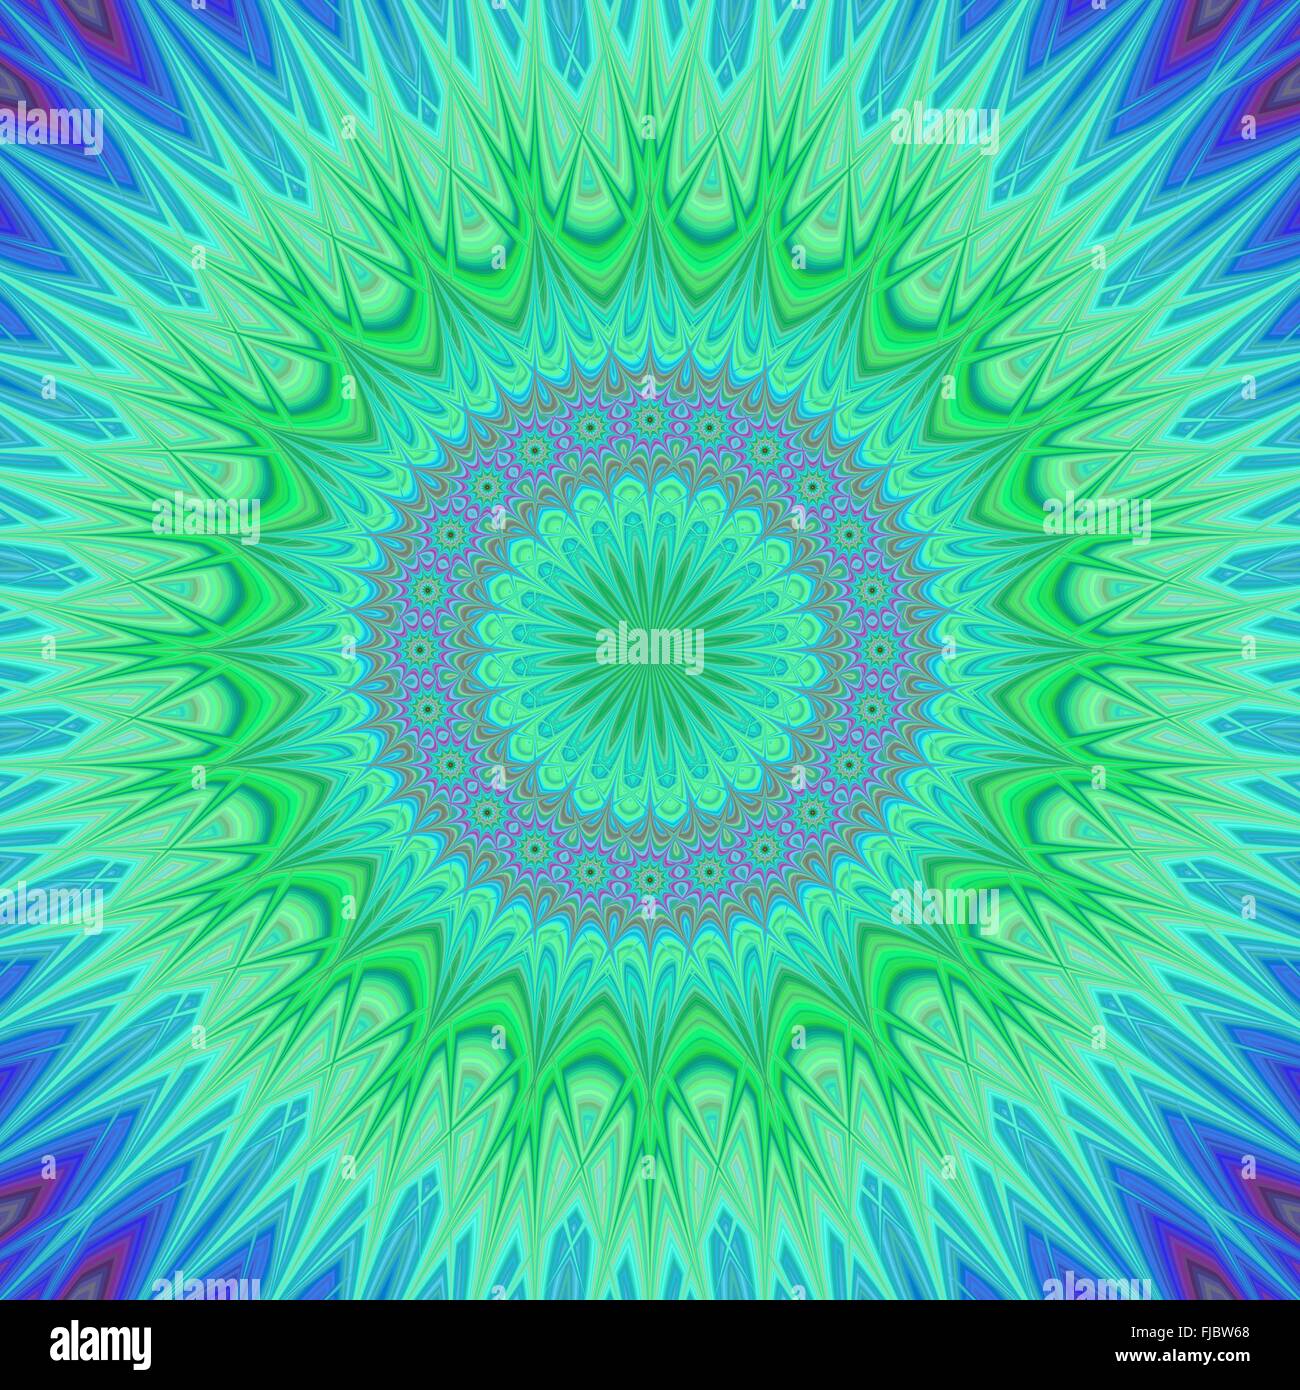 Mandala Crystal fond fractale Illustration de Vecteur